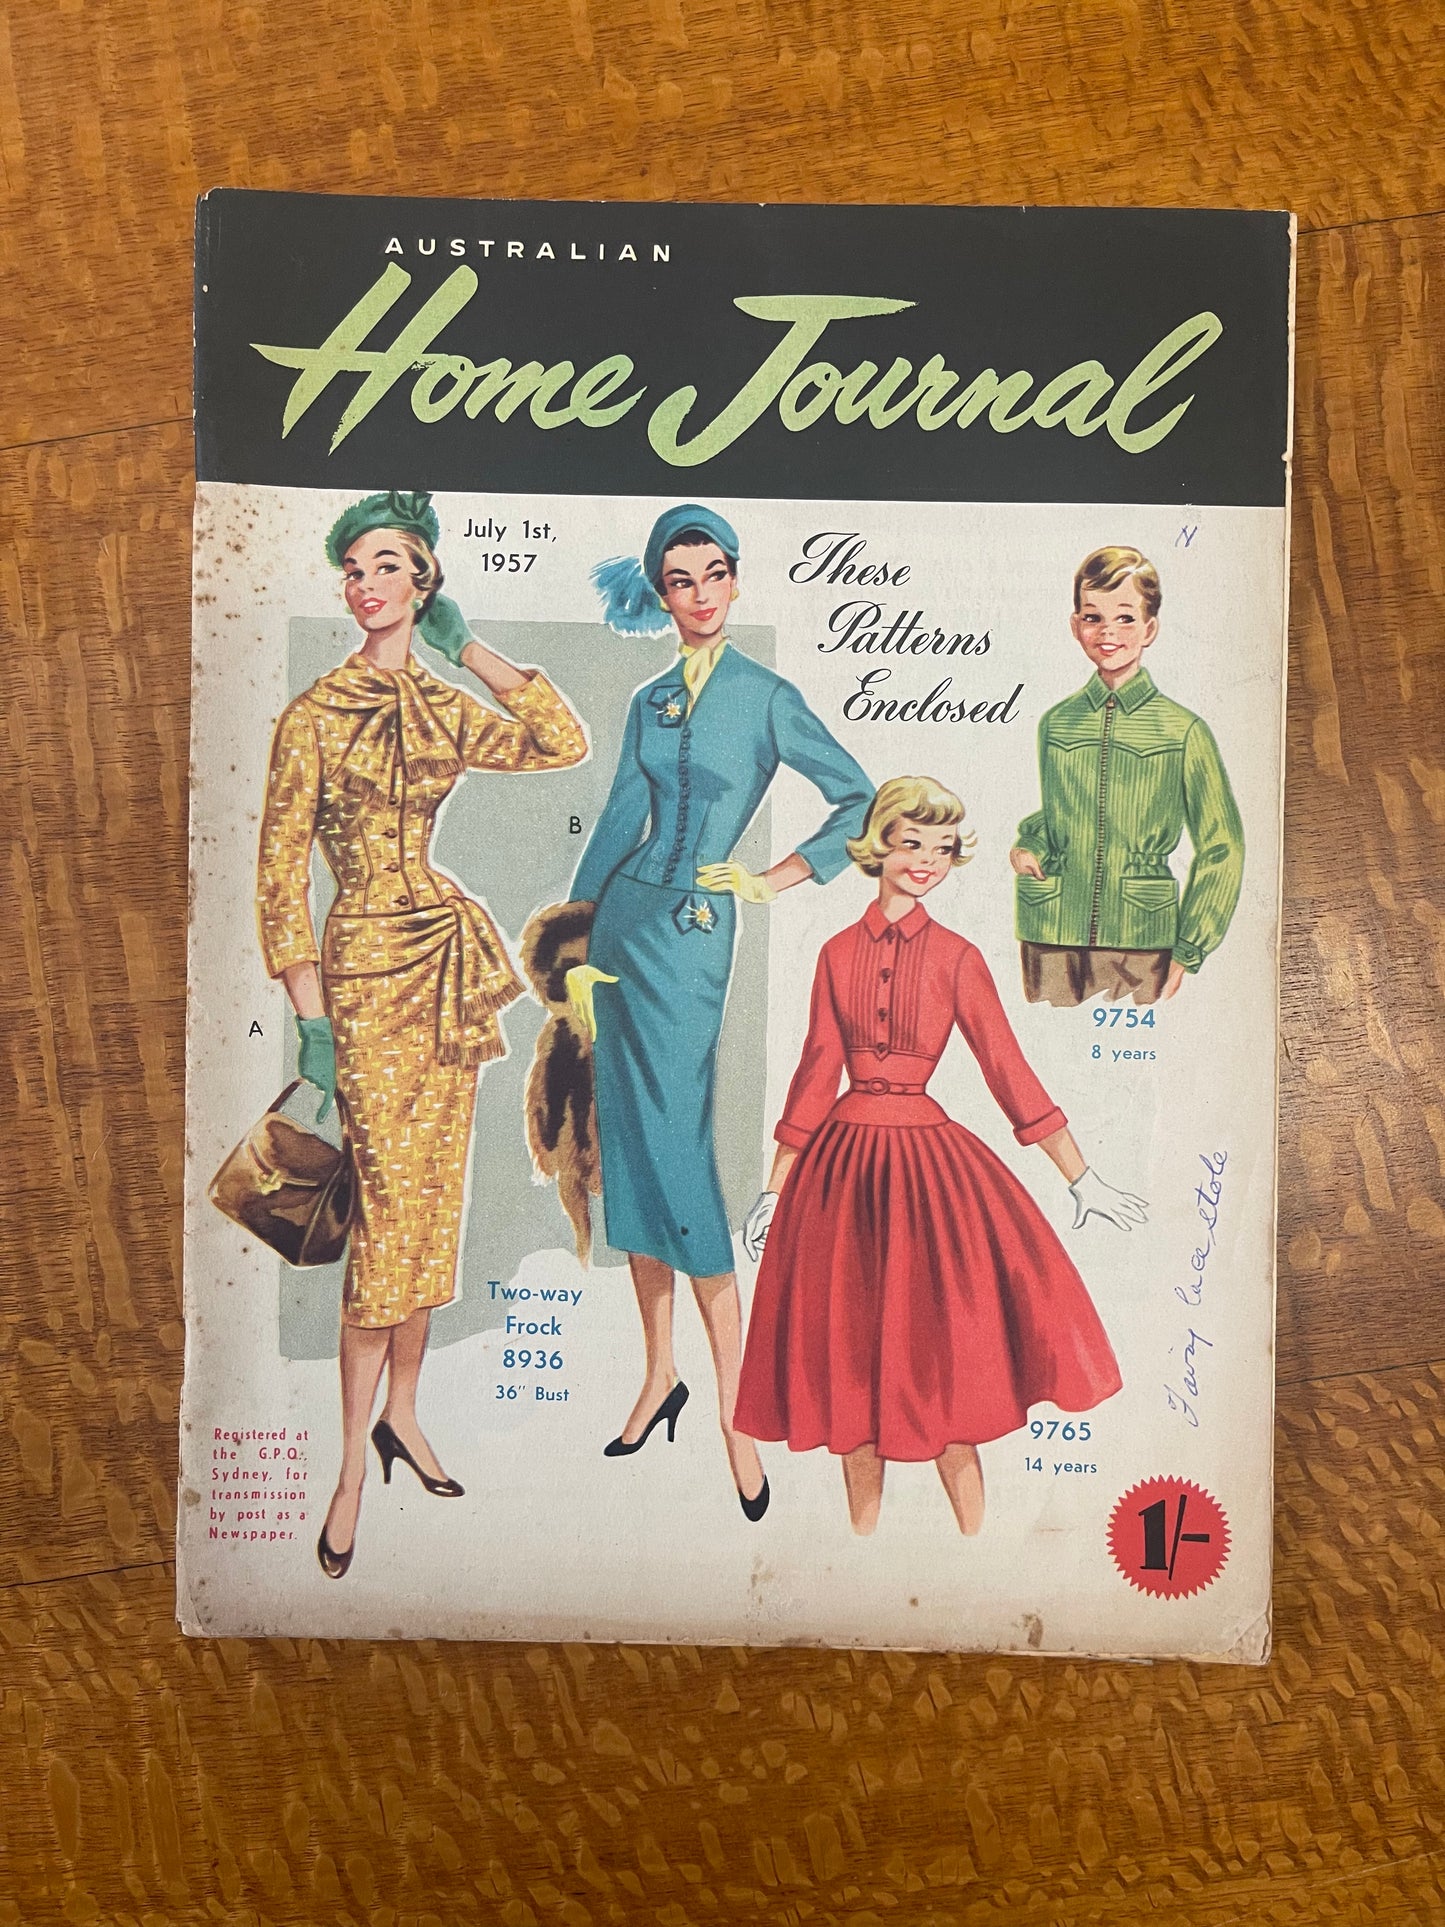 Vintage Australian Home Journal Magazine - July 1 1957 - Includes Patterns